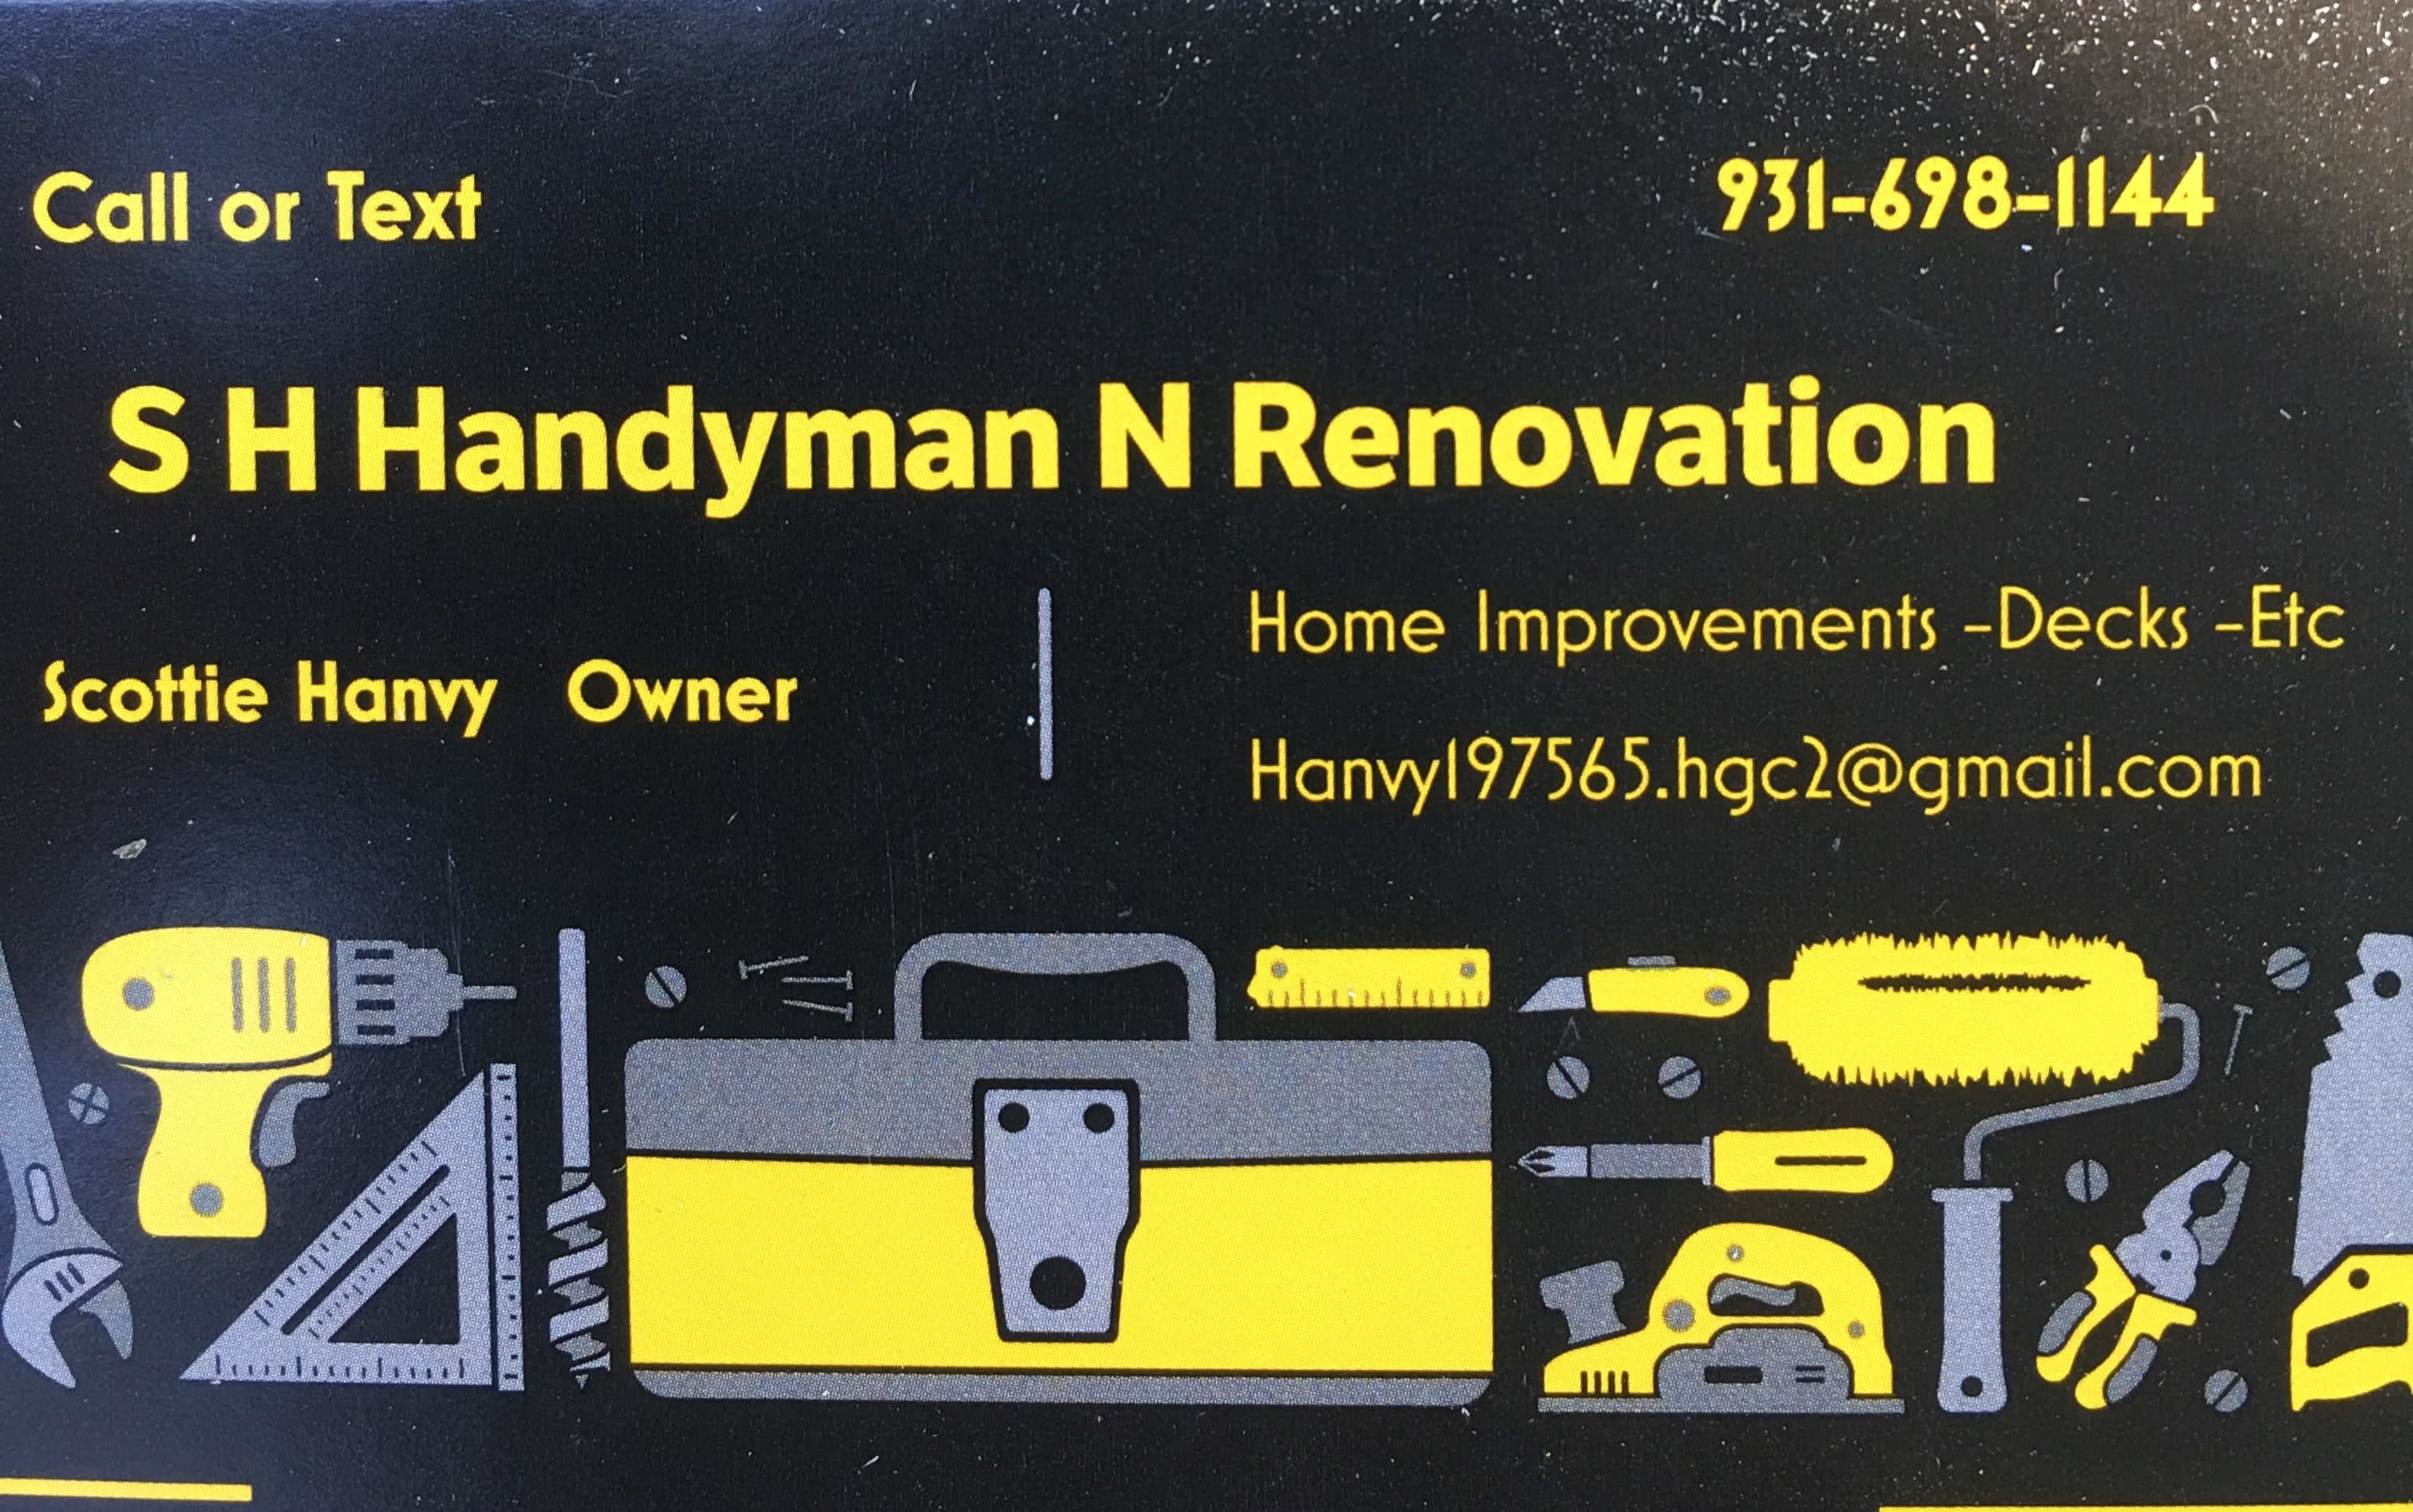 S H Handyman N Renovation